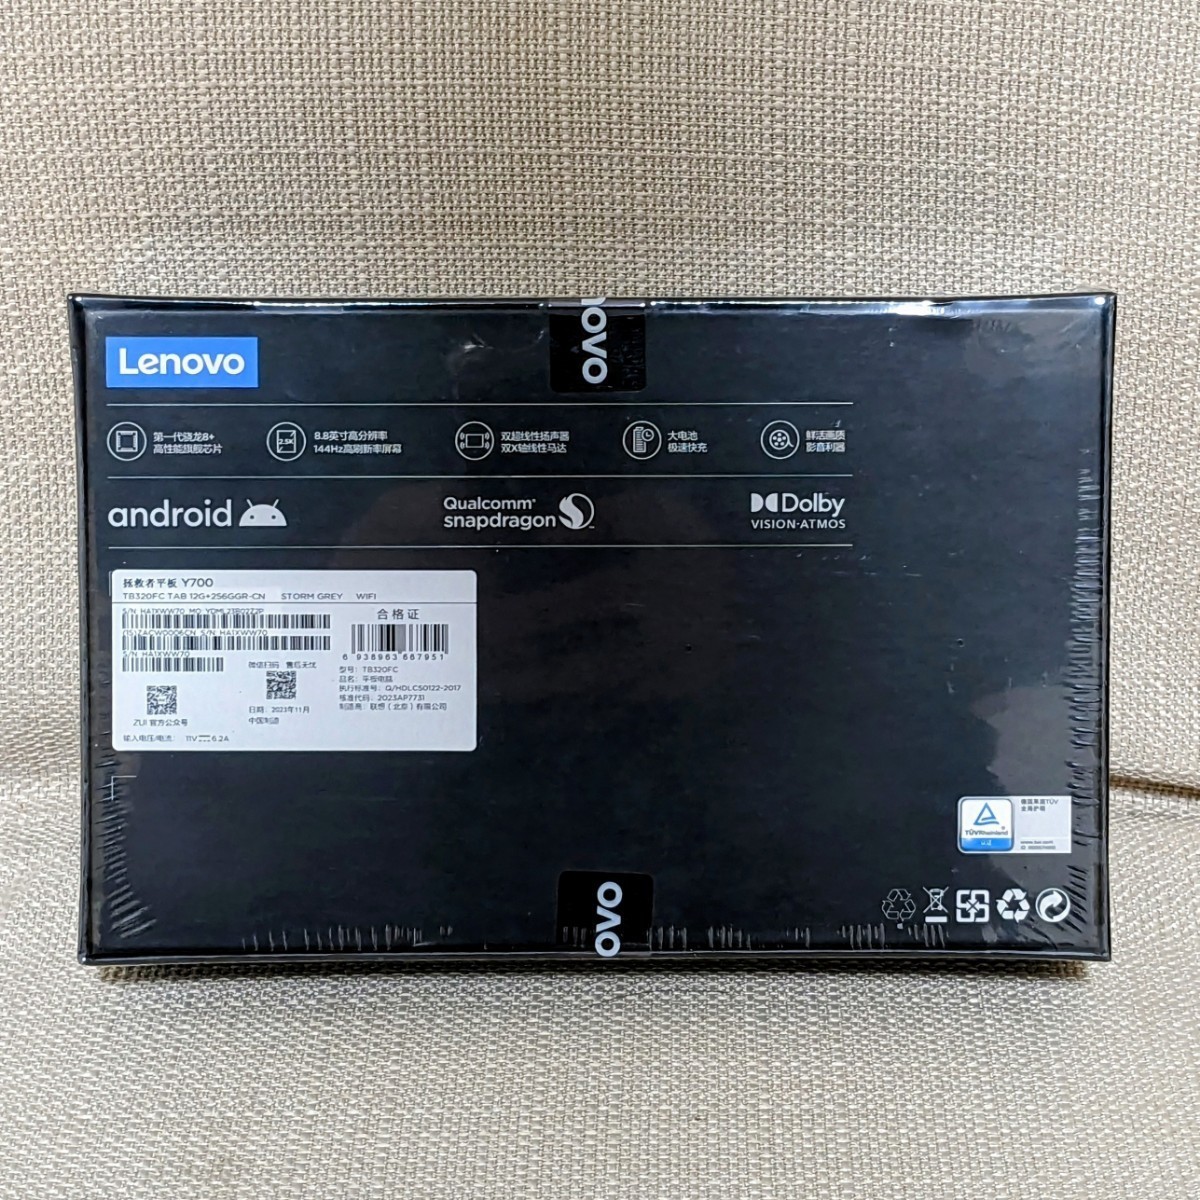 Lenovo LEGION Y700 2023 12GB/256GB 新品 未開封 CNバージョン 日本語